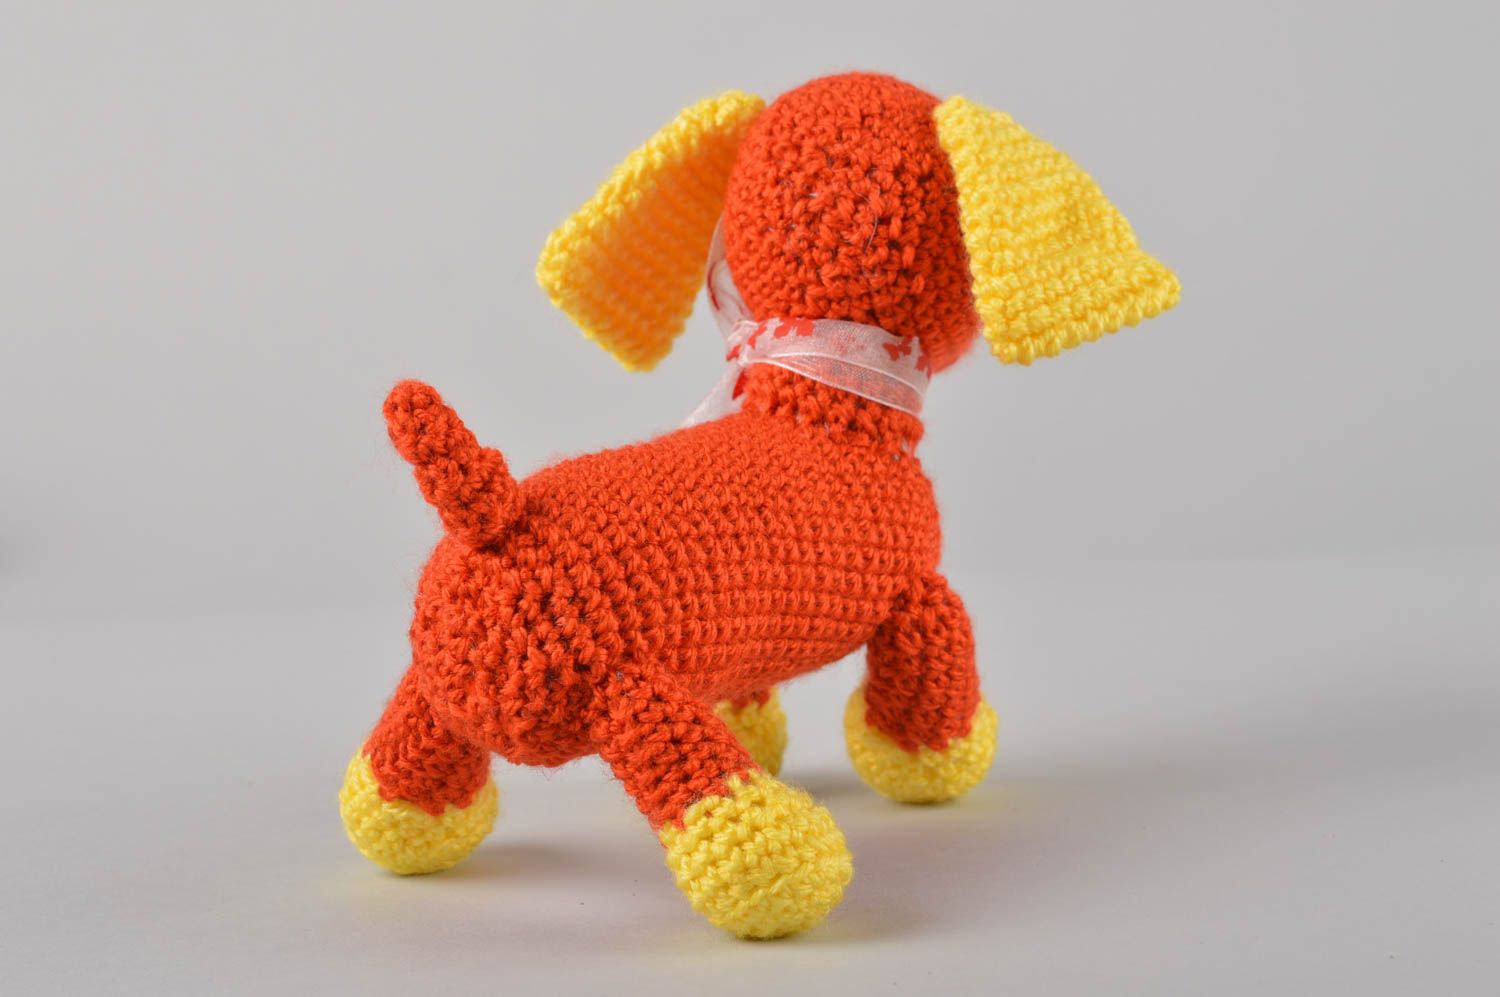 Handmade toy designer toy crochet toy baby toy nursery decor gift for children photo 4